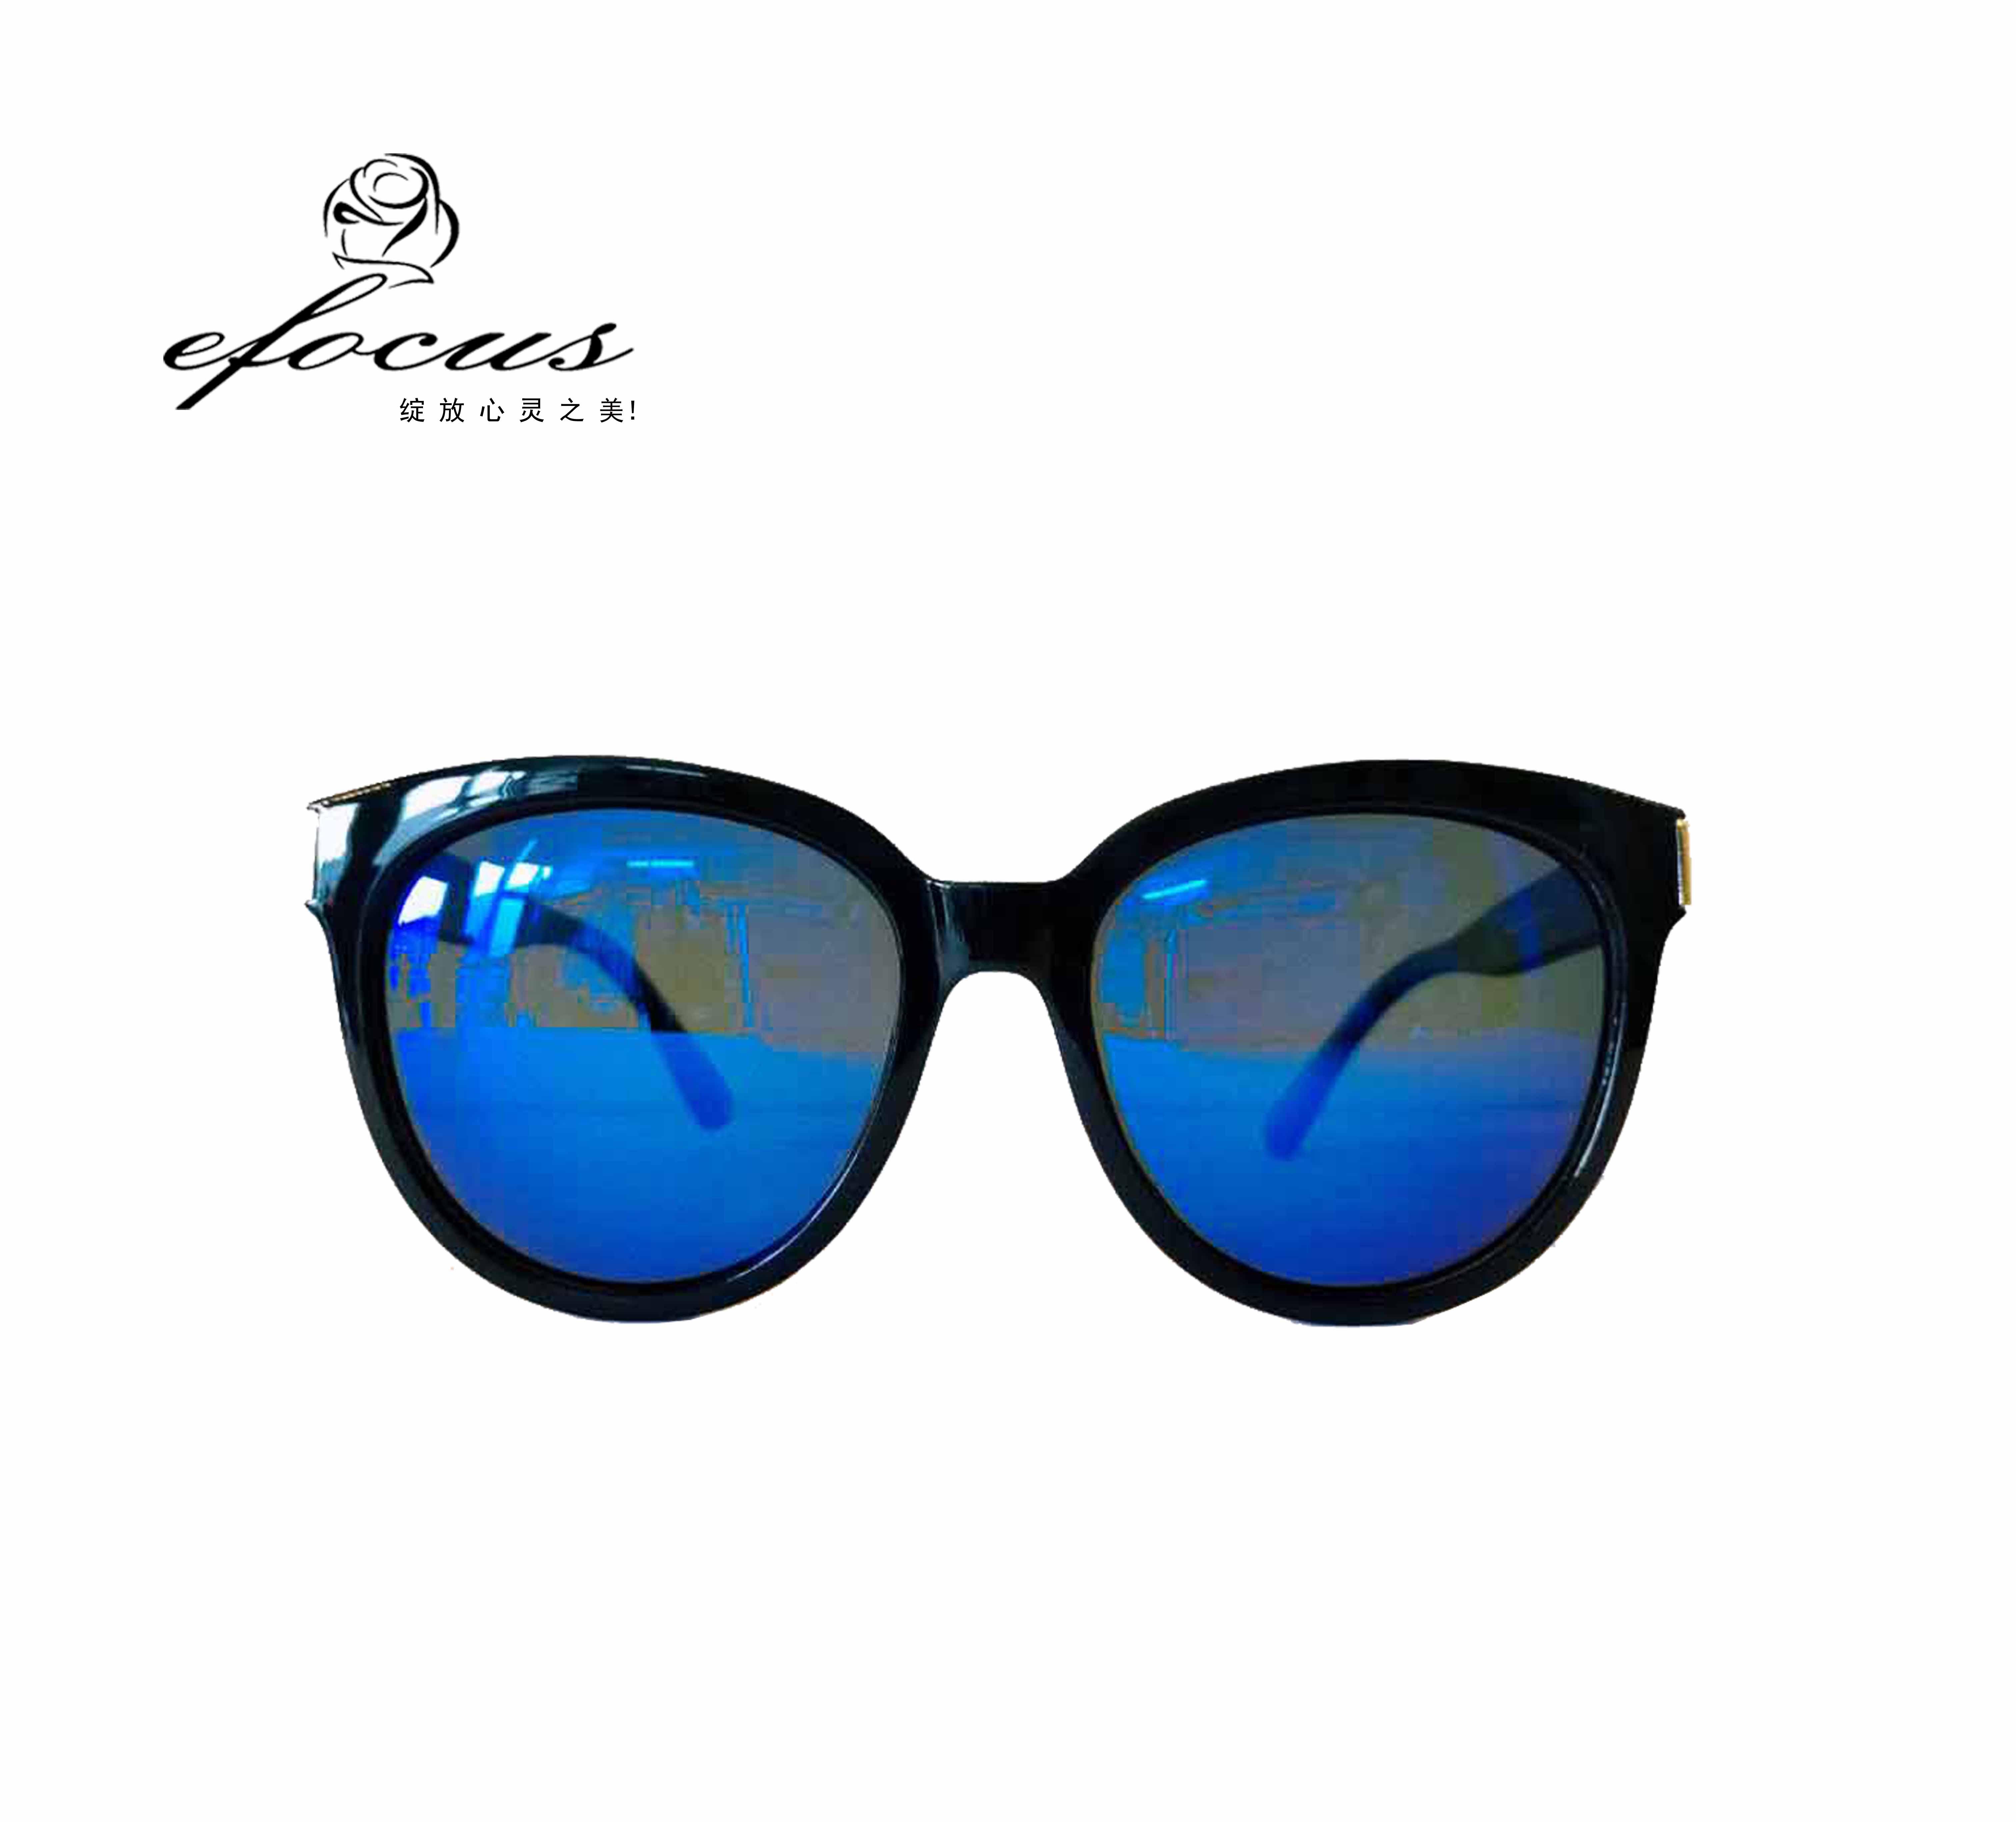 EFocus Yidian 2020 spring and summer Polarized Sunglasses Womens outdoor travel versatile fashion sunglasses